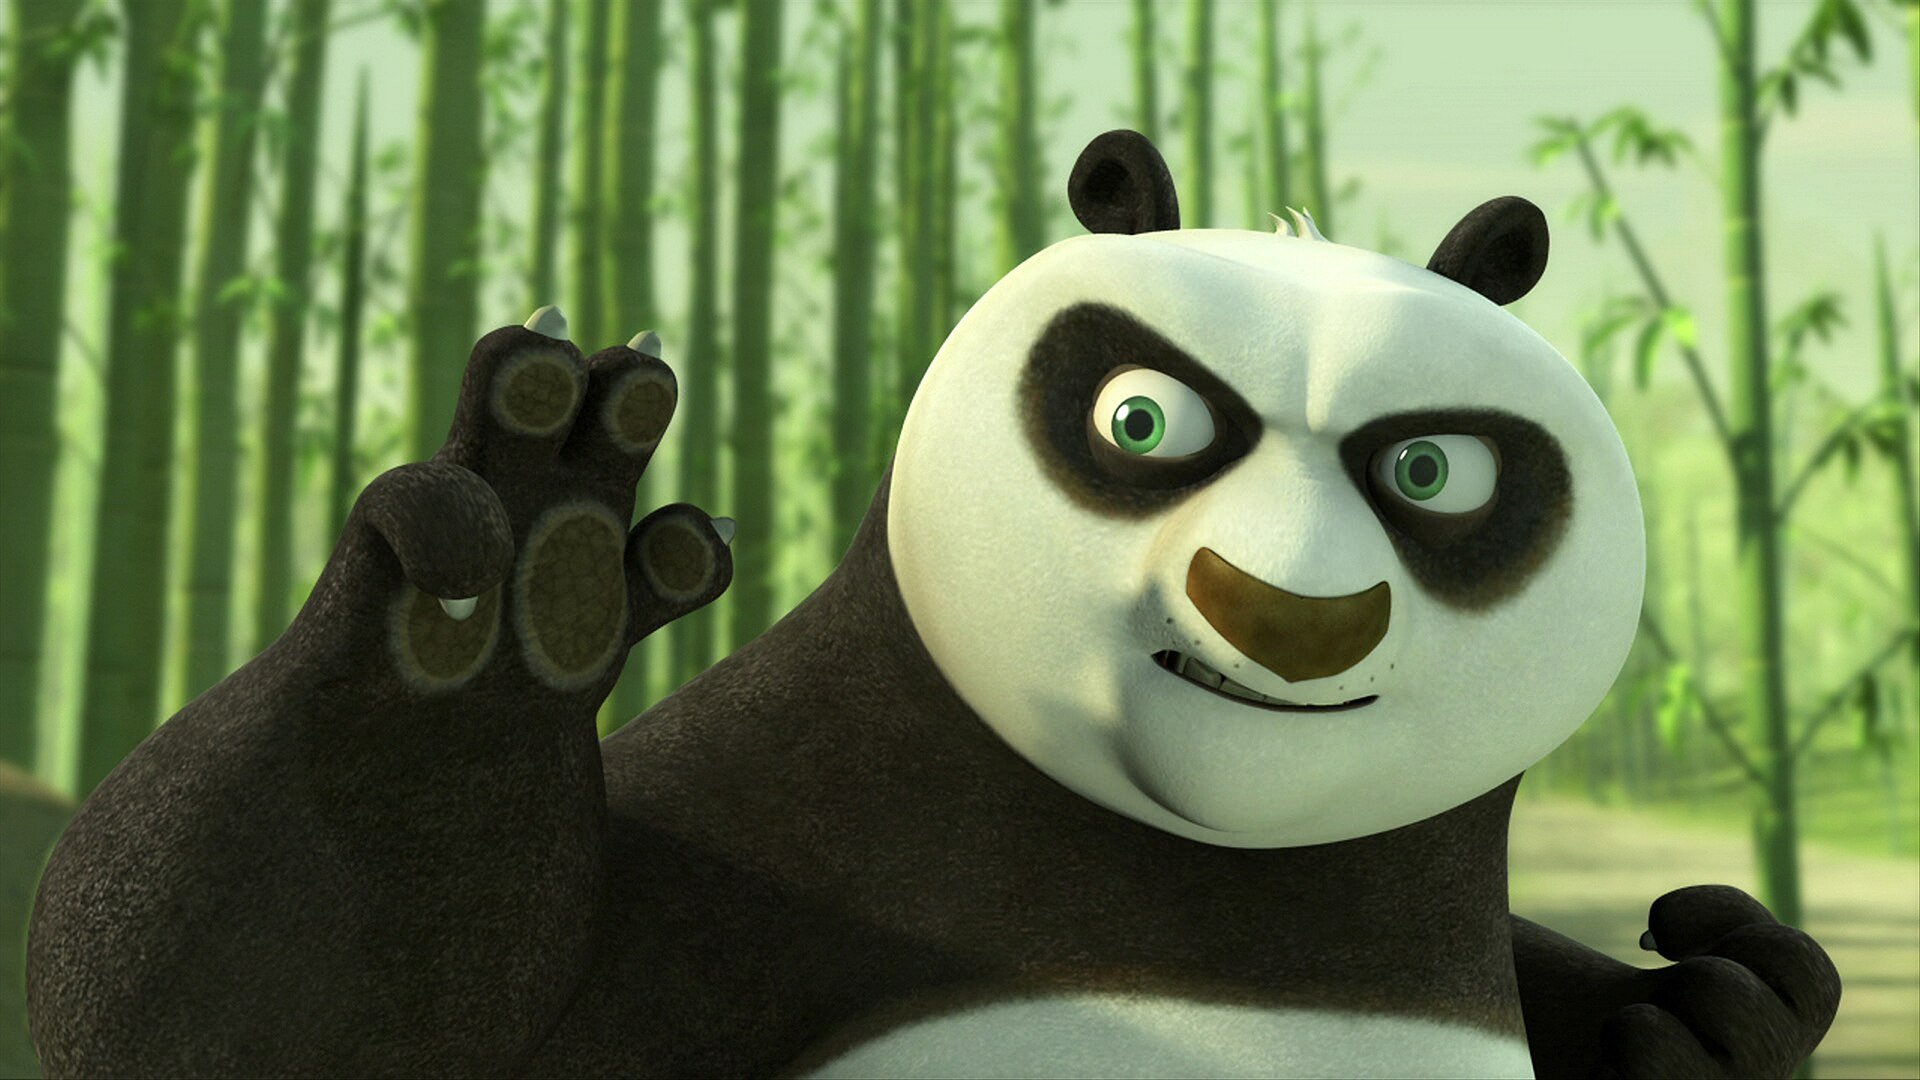 kung fu panda 3 watch streaming